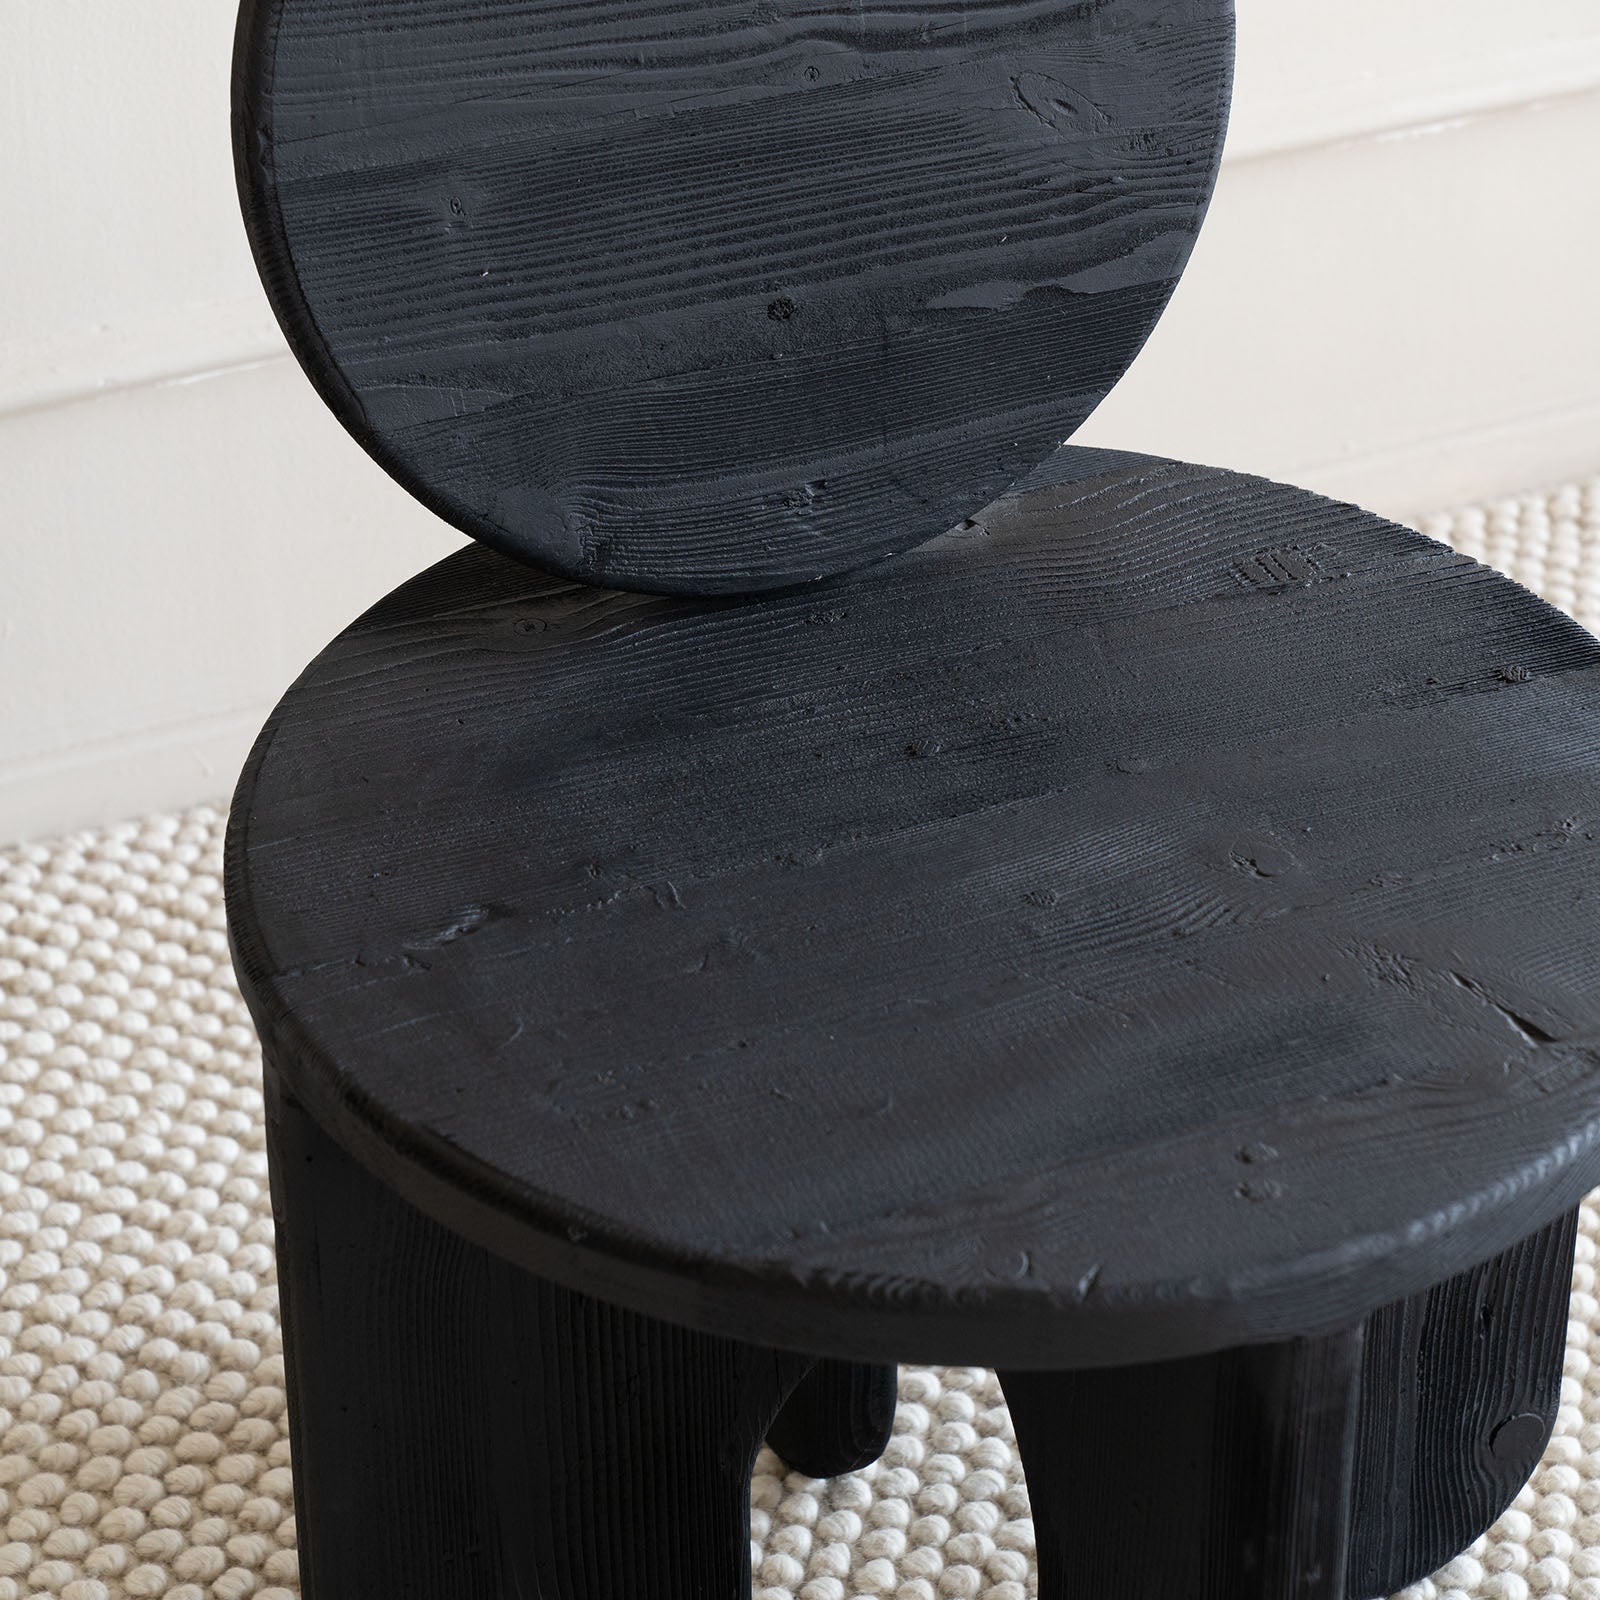 Tokyo Chair-Black  - WS Living - UAE -  Wood and steel Furnitures - Dubai